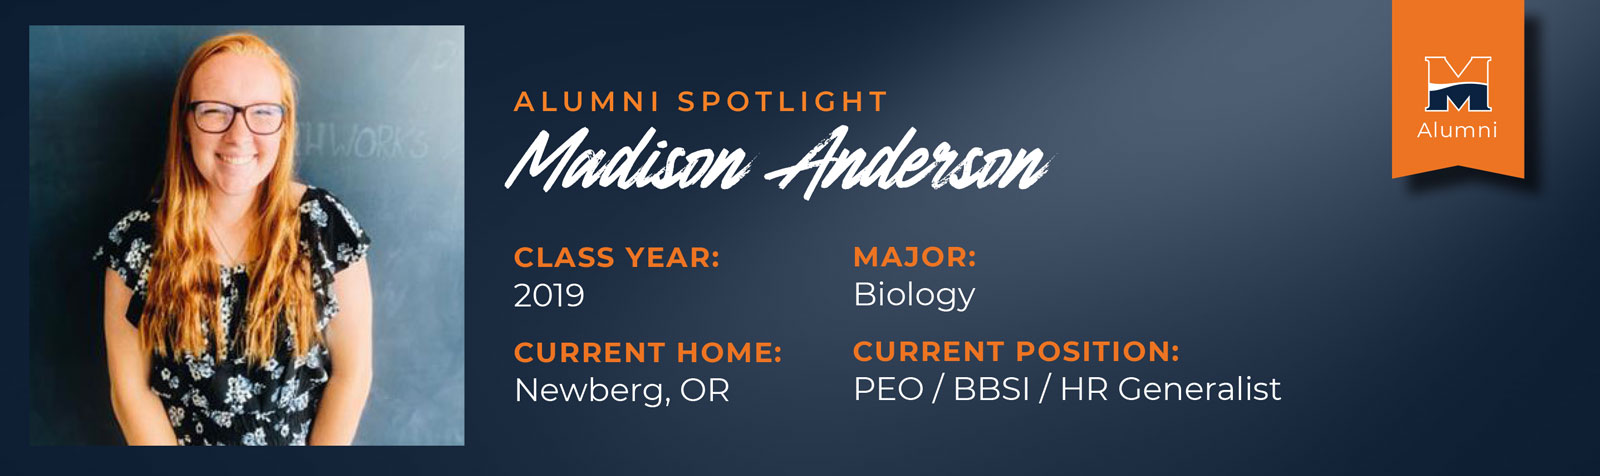 Madison Anderson Alumni Spotlight